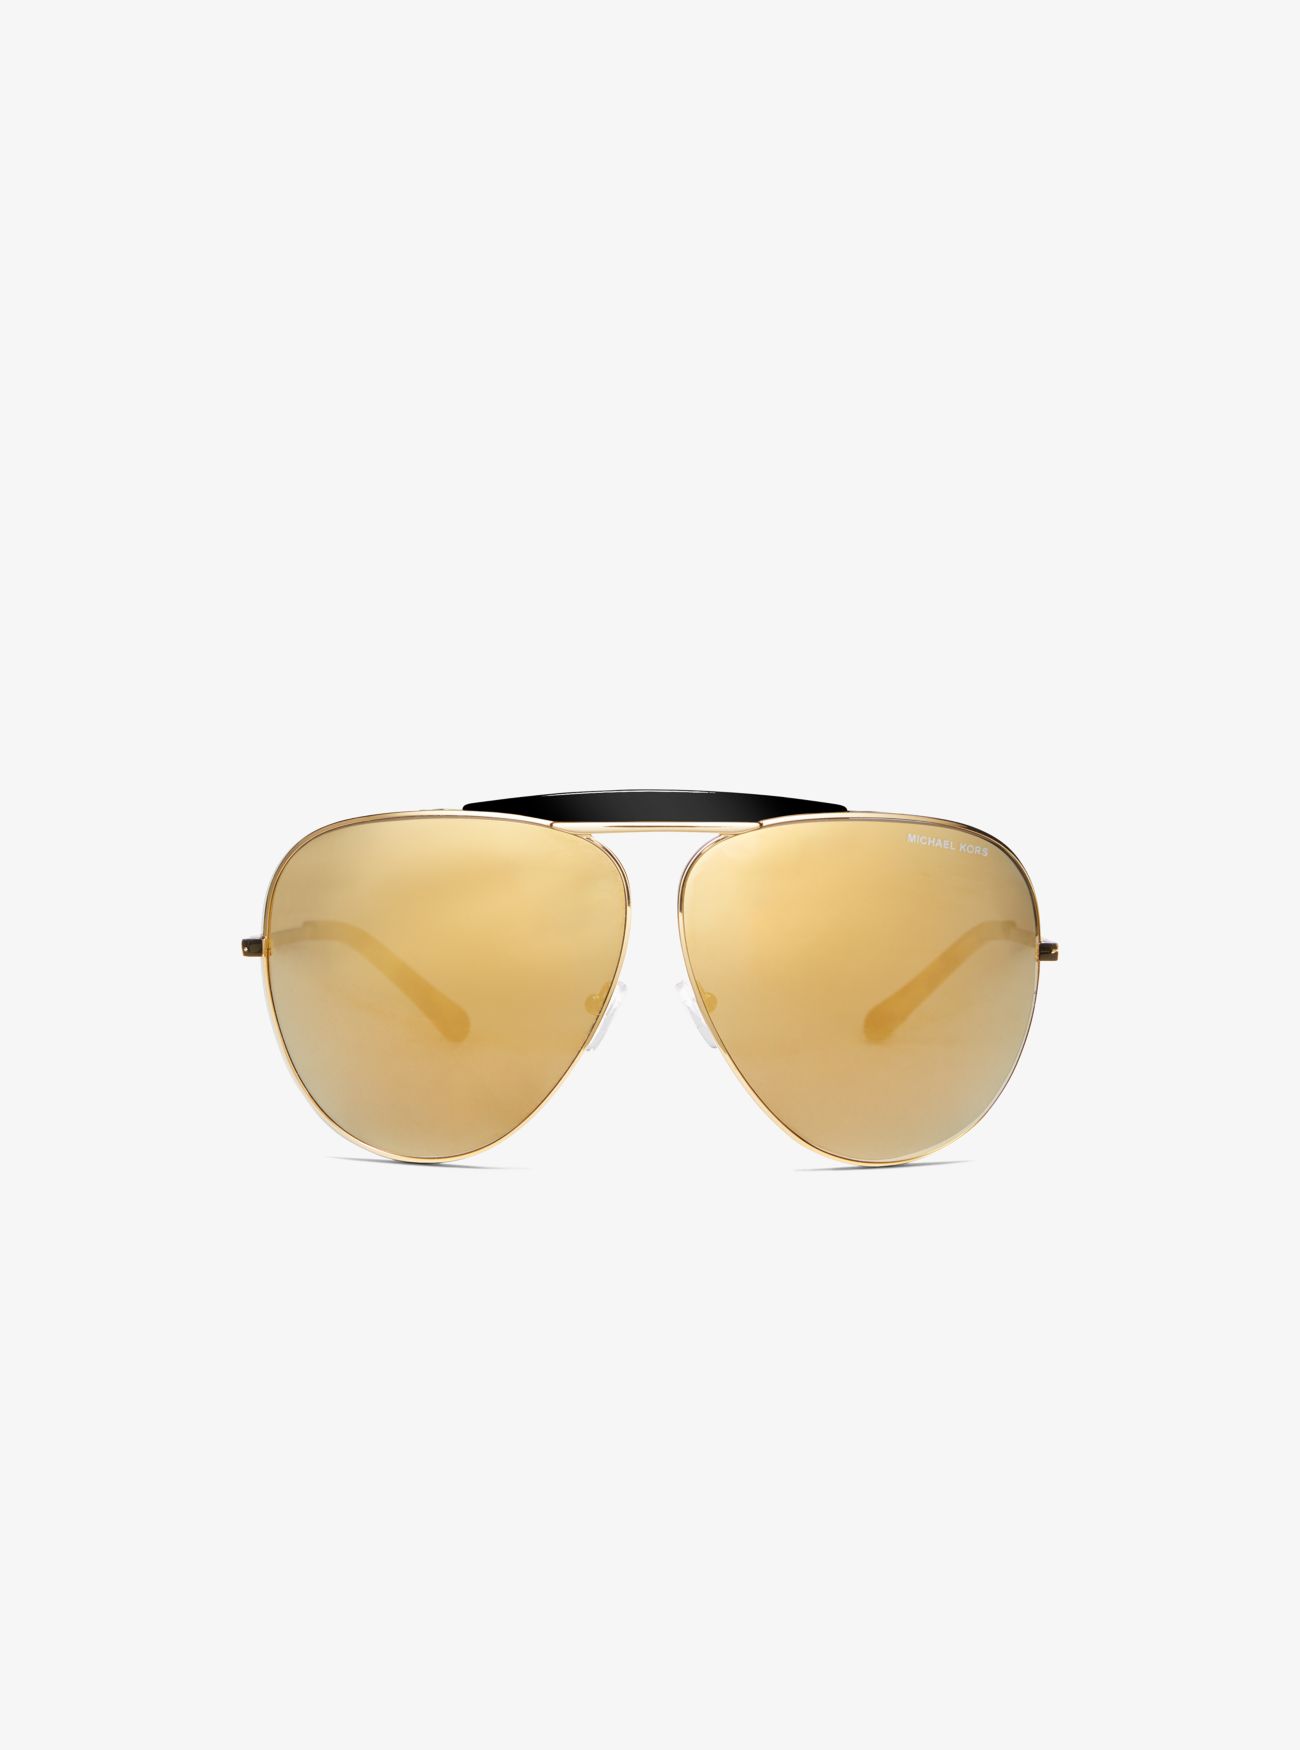 MK Bleecker Sunglasses - Gold/black - Michael Kors